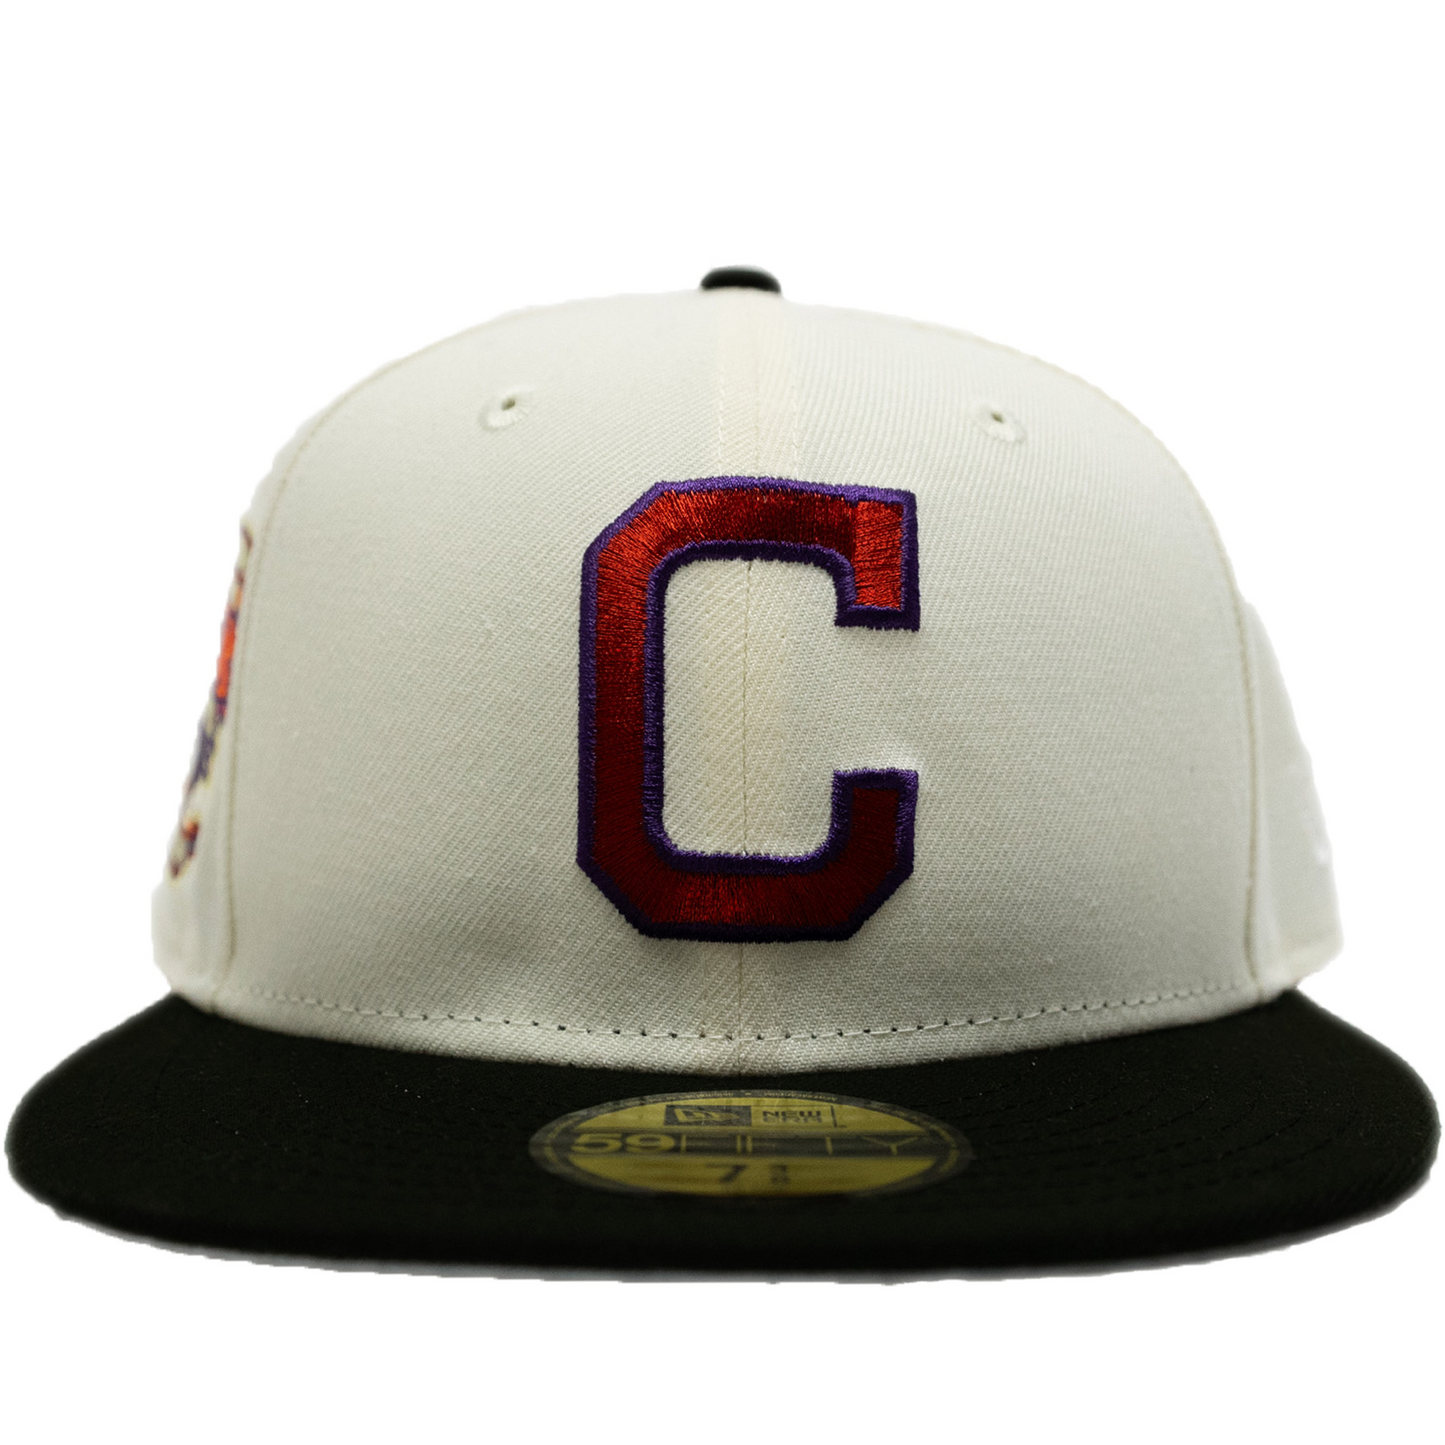 New Era Cleveland Indians 59FIFTY Hat - Off White/ Black